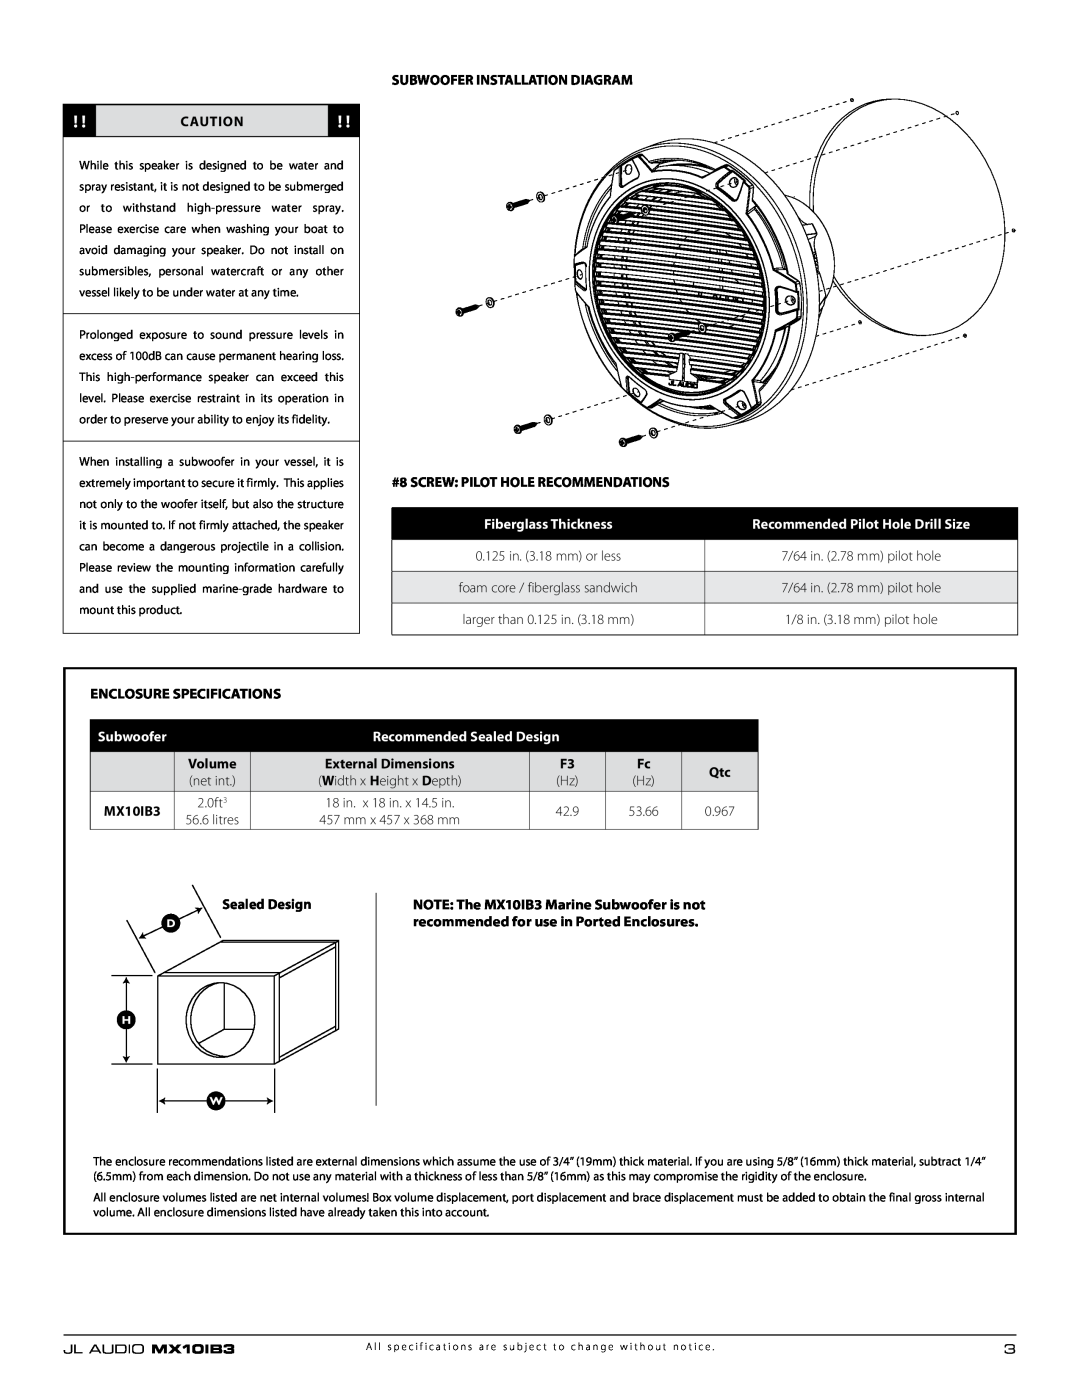 JL Audio MX10IB3 Subwoofer Installation Diagram, #8 SCREW PILOT HOLE RECOMMENDATIONS, Fiberglass Thickness, Sealed Design 